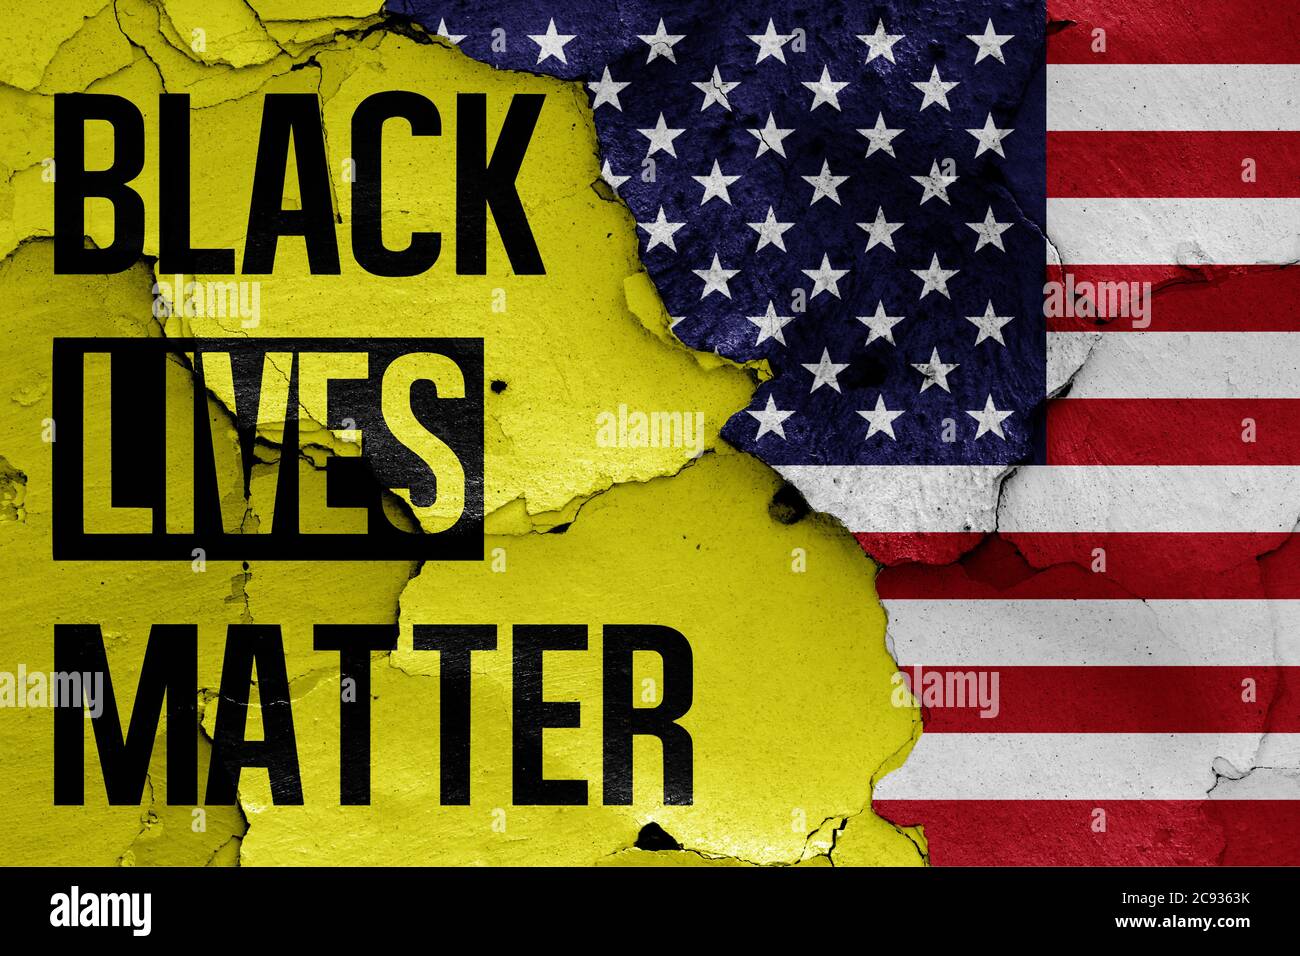 United States, Black Lives Matter, BLM Stock Photo